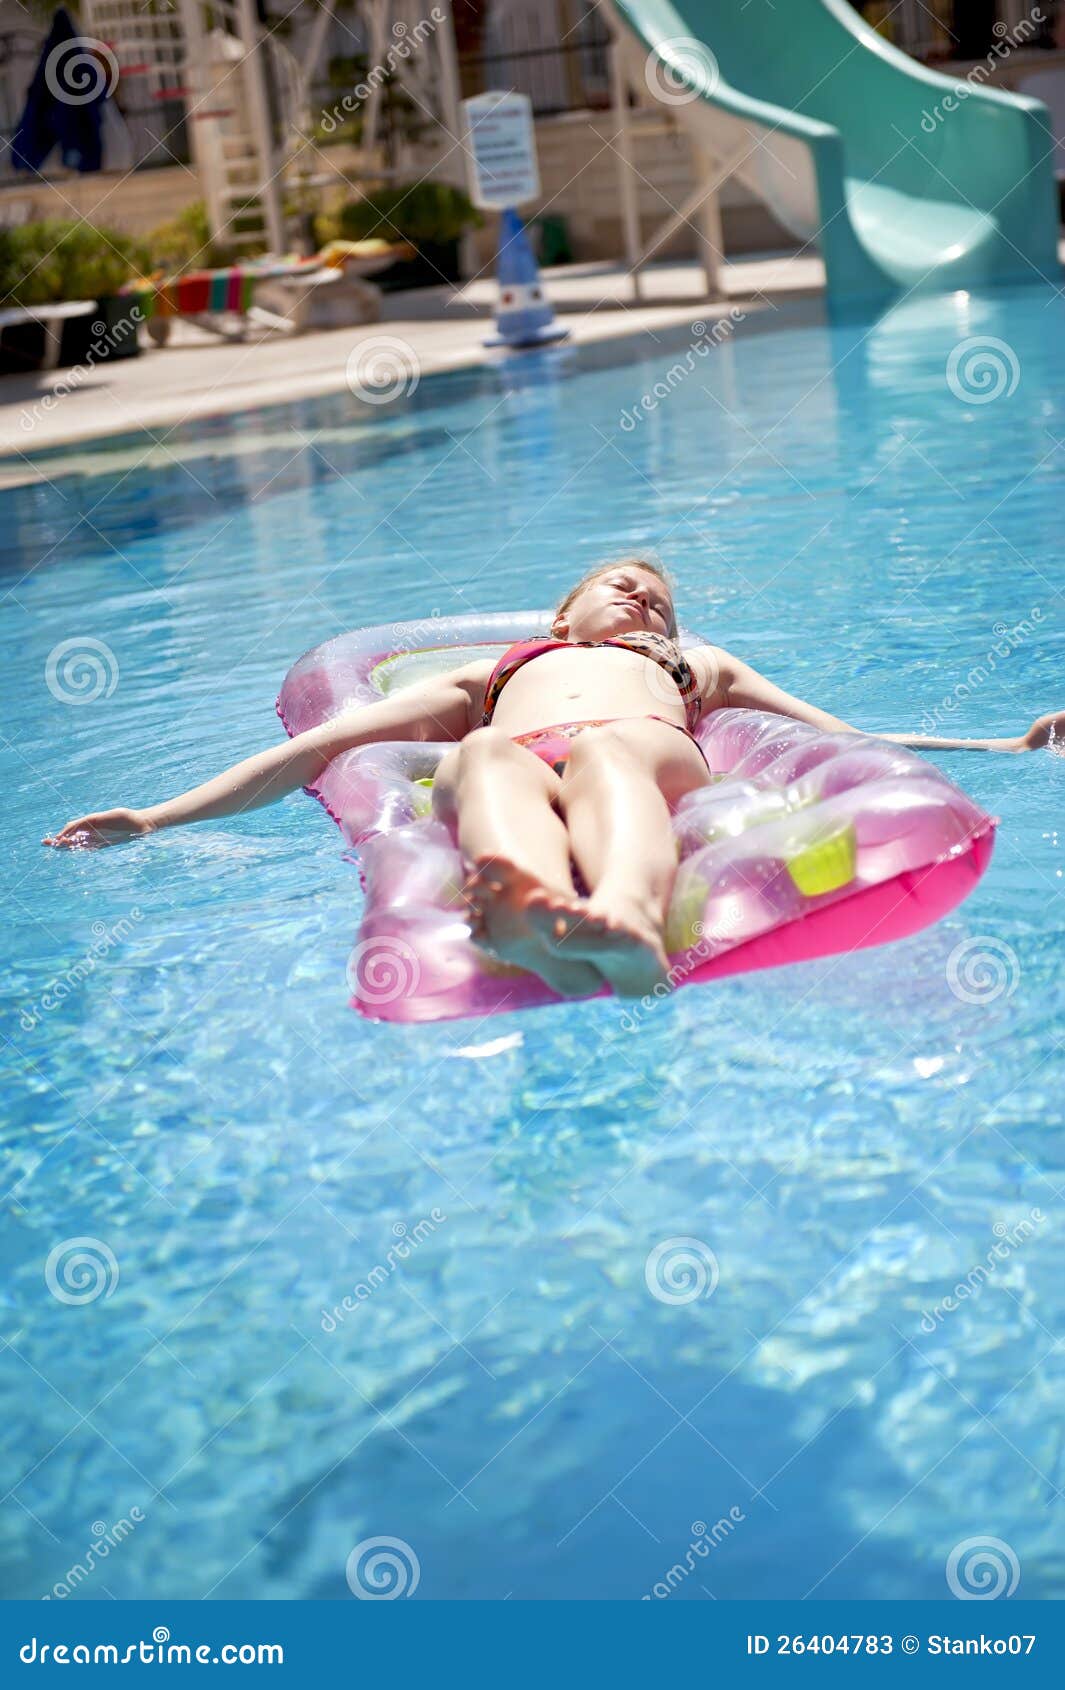 girl sunbathing on a mattress